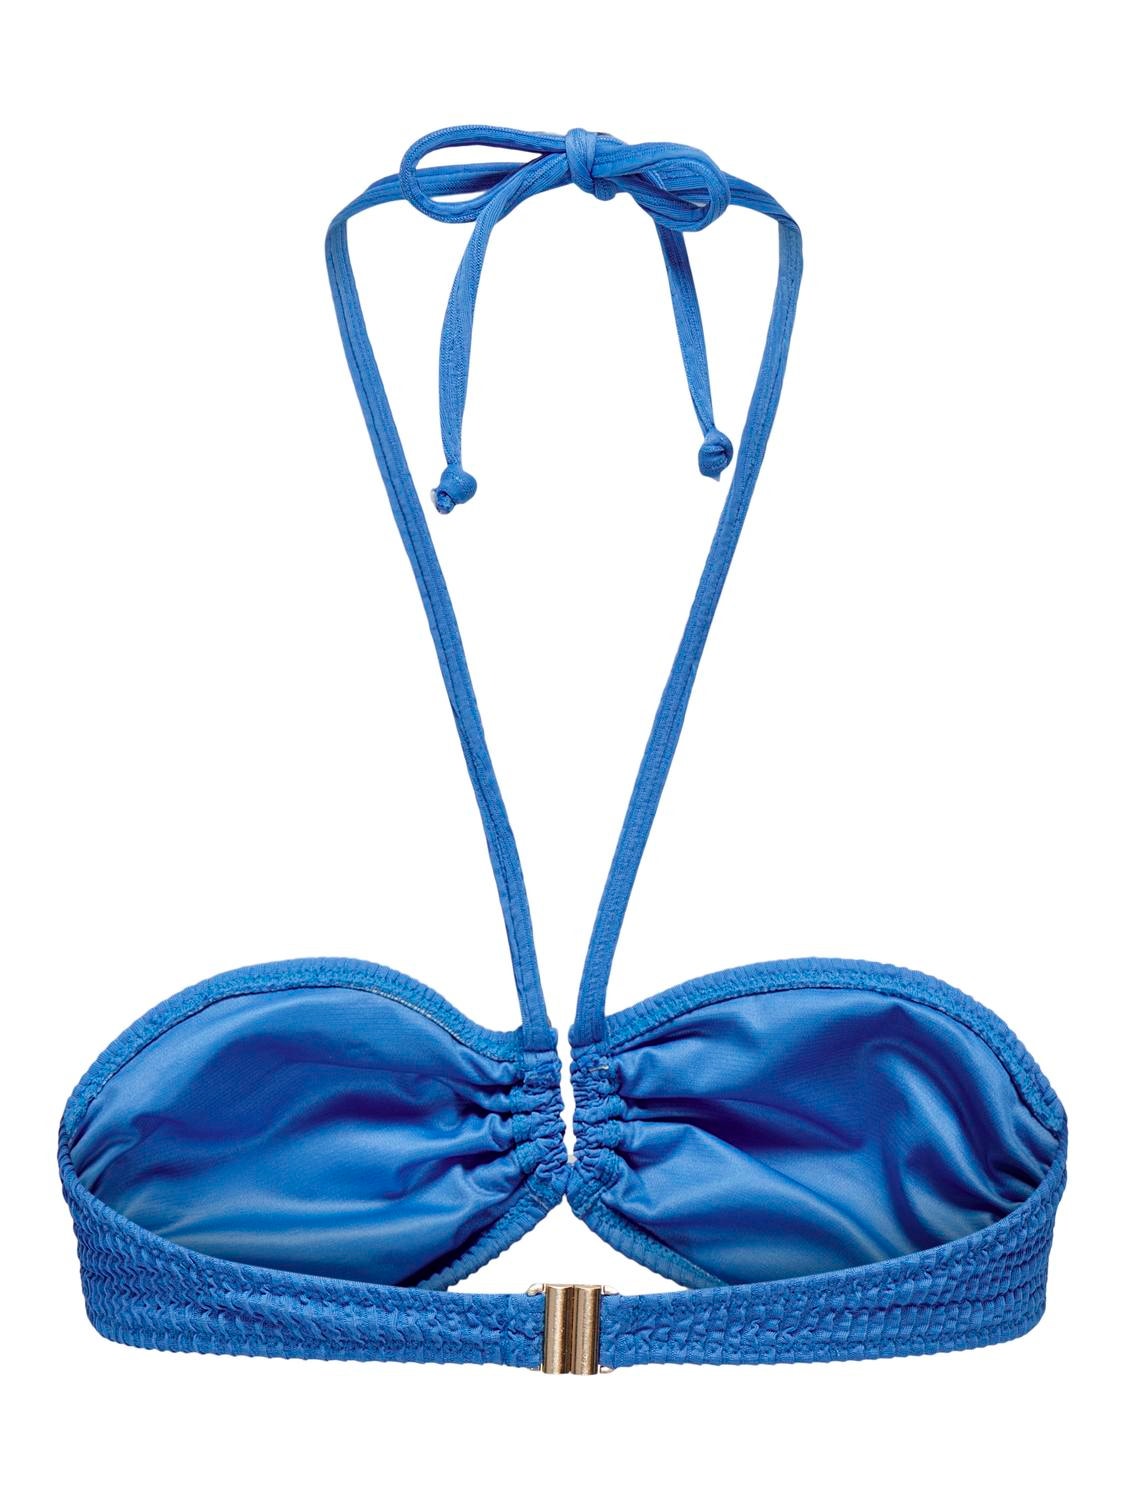 ONLY Bandeau bikini top -Ibiza Blue - 15314260